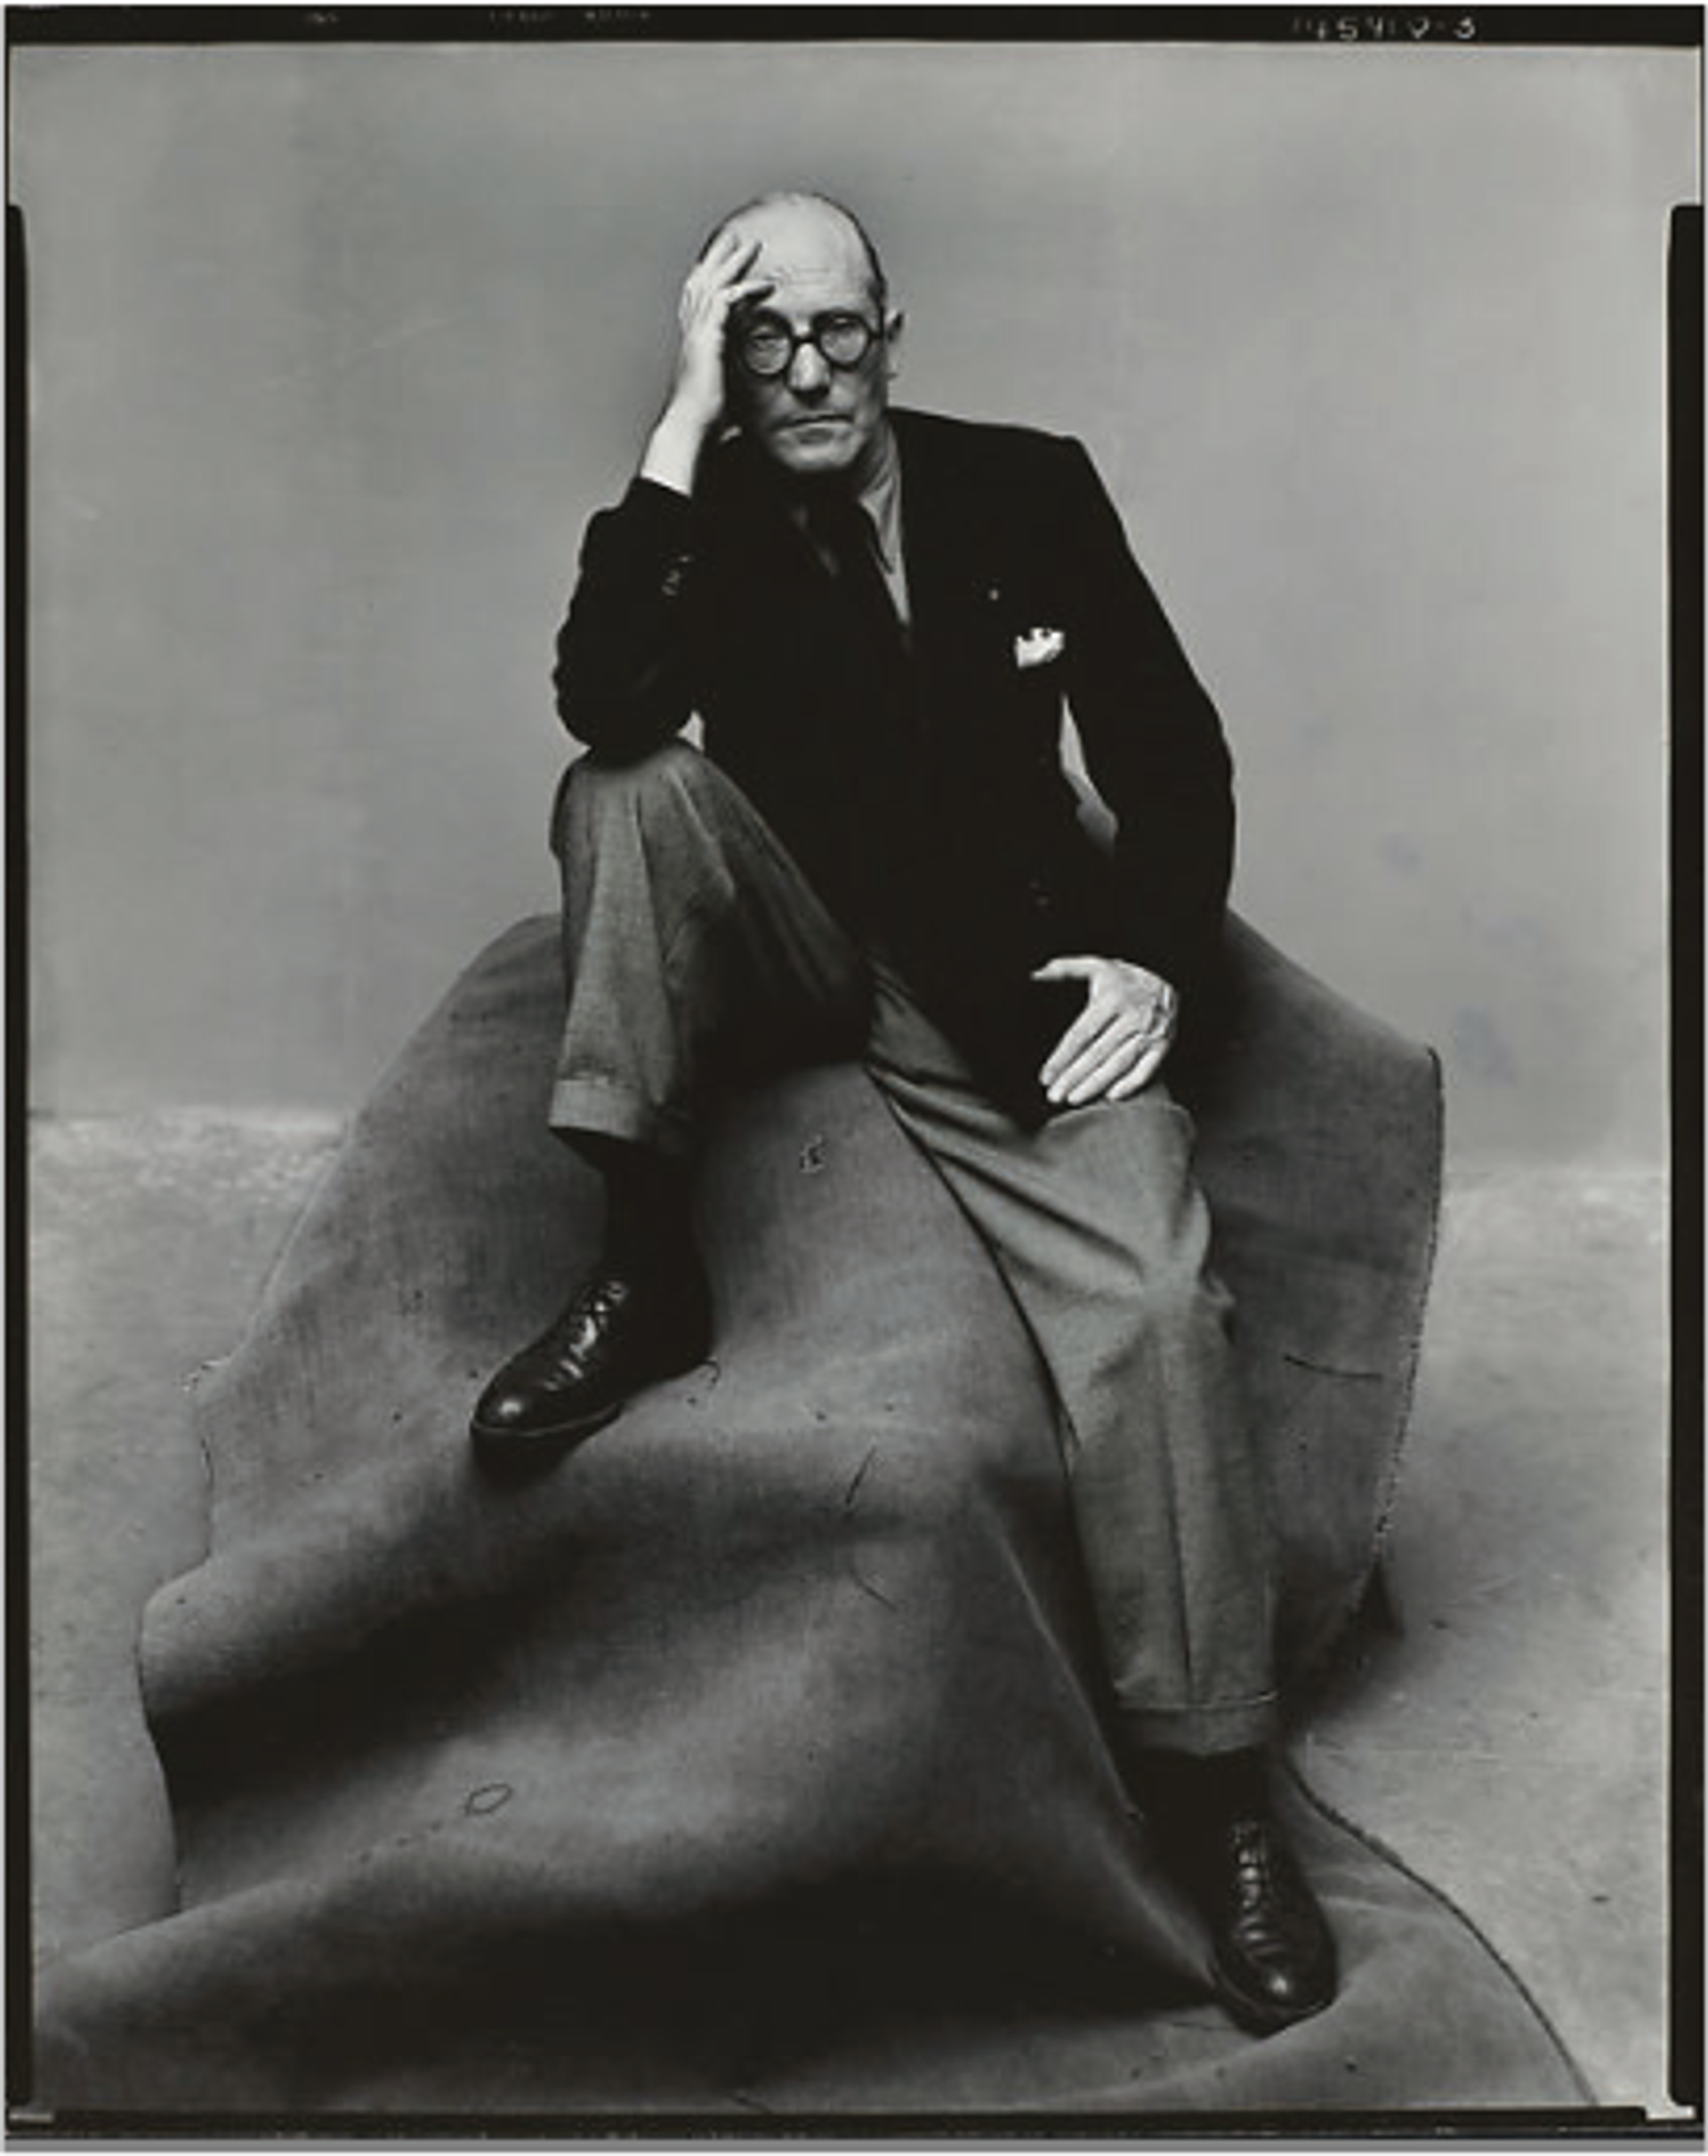 Irving Penn, Le Corbusier (1 of 2), New York, 1947, tirage gélatino-argentique, 1983. © The Irving Penn Foundation – don partiel de l’Irving Penn Foundation